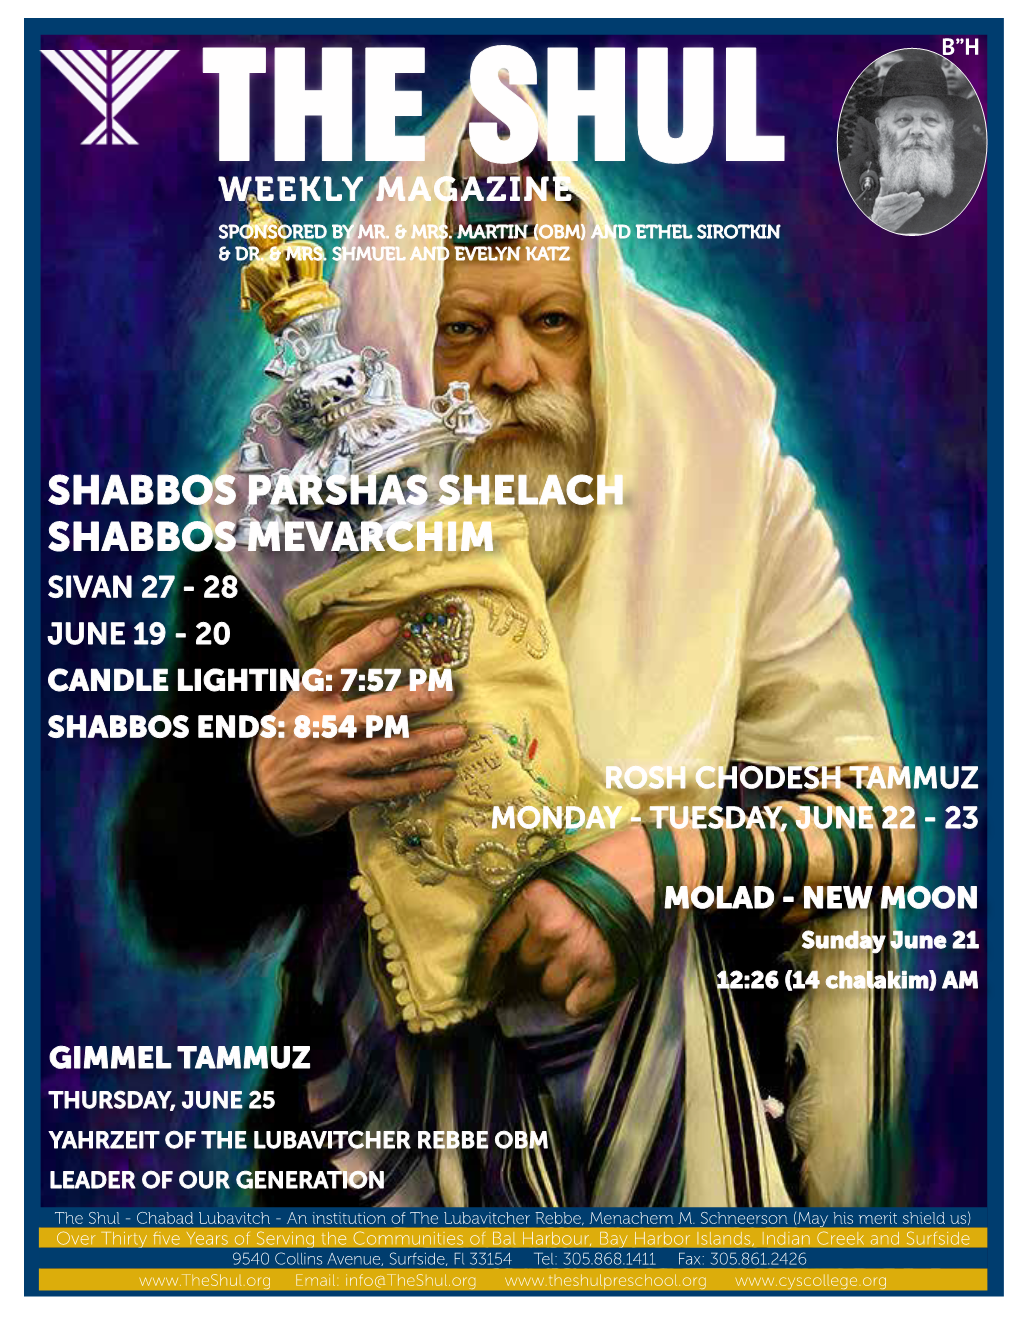 Shabbos Parshas Shelach Shabbos Mevarchim Sivan 27 - 28 June 19 - 20 Candle Lighting: 7:57 Pm Shabbos Ends: 8:54 Pm Rosh Chodesh Tammuz Monday - Tuesday, June 22 - 23